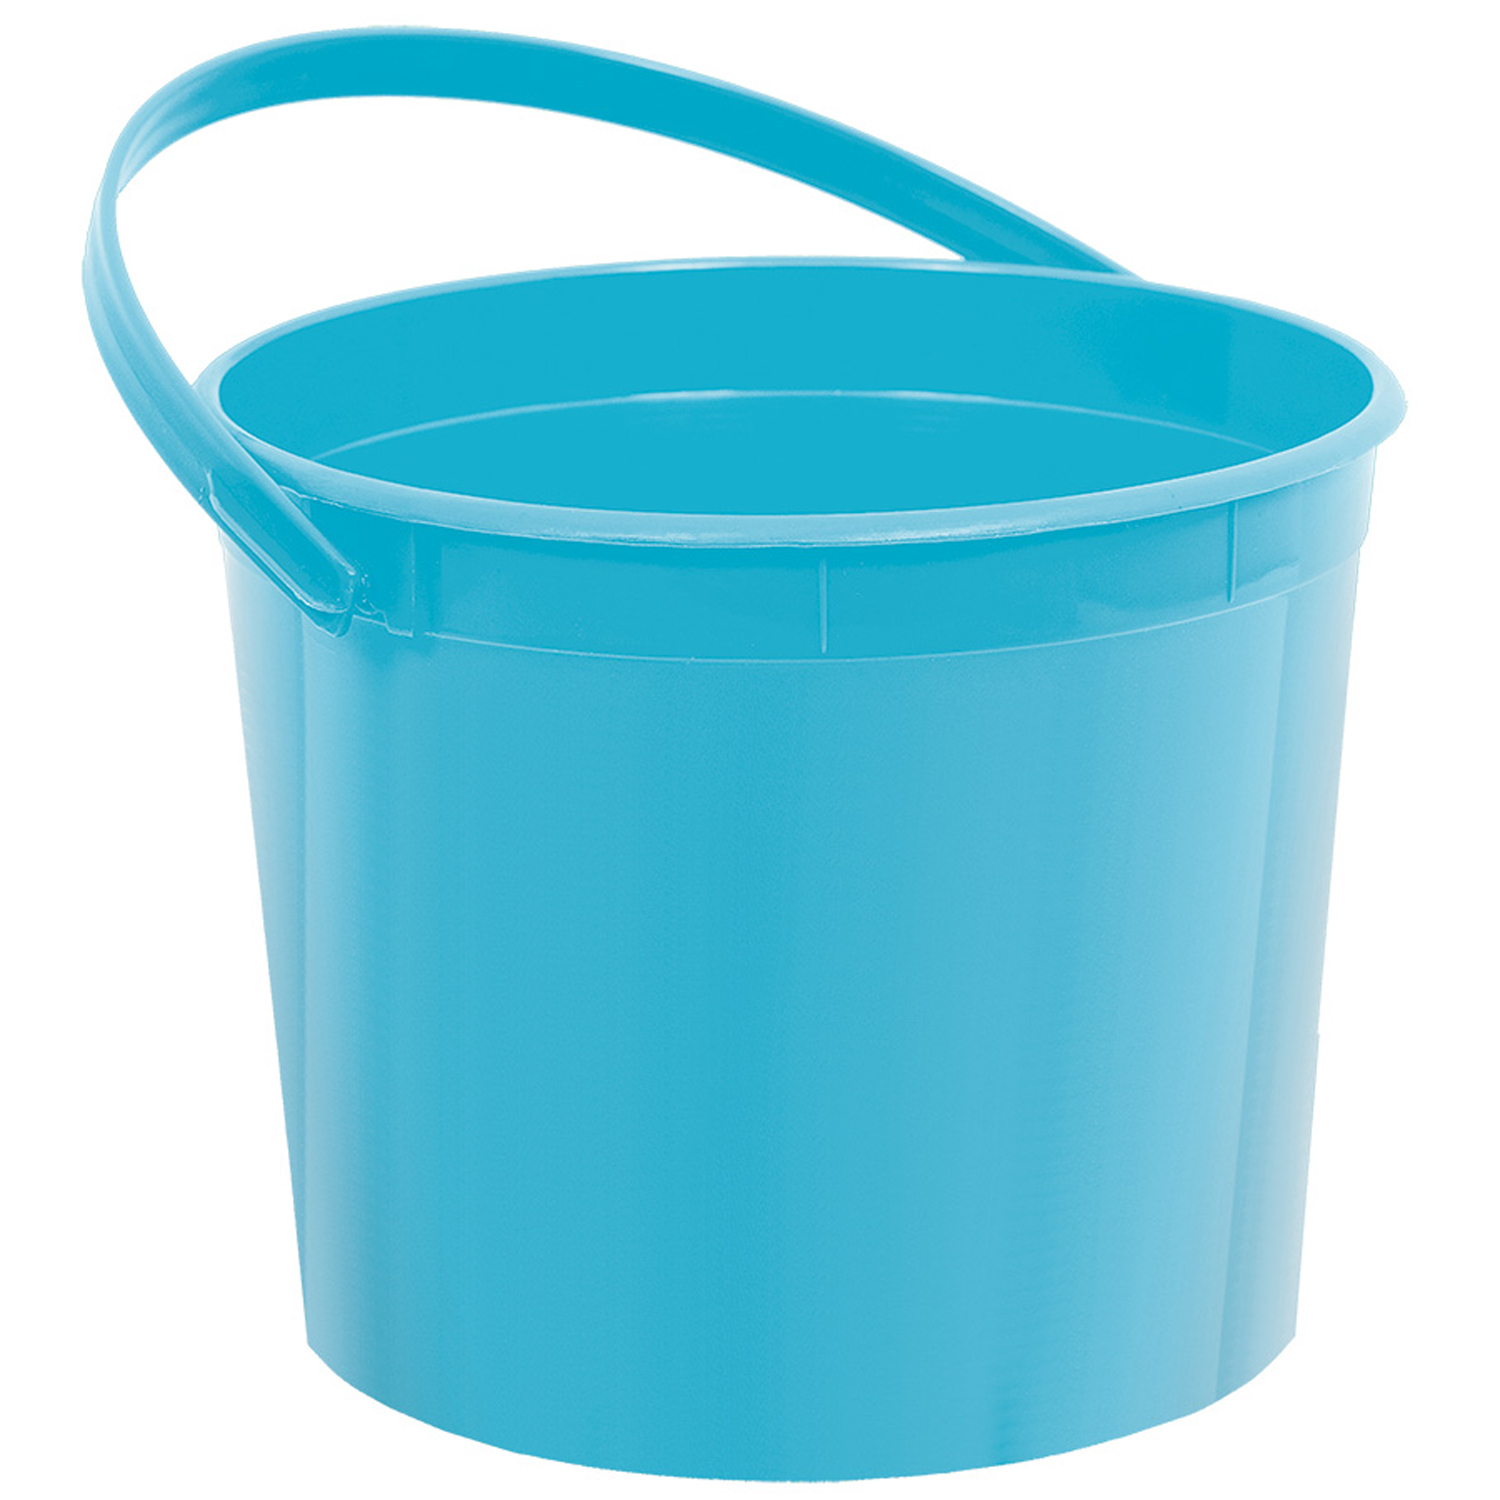 Caribbean Blue Plastic Buckets with Handles 11cm h x 17cm dia - 12 PC :  Amscan International